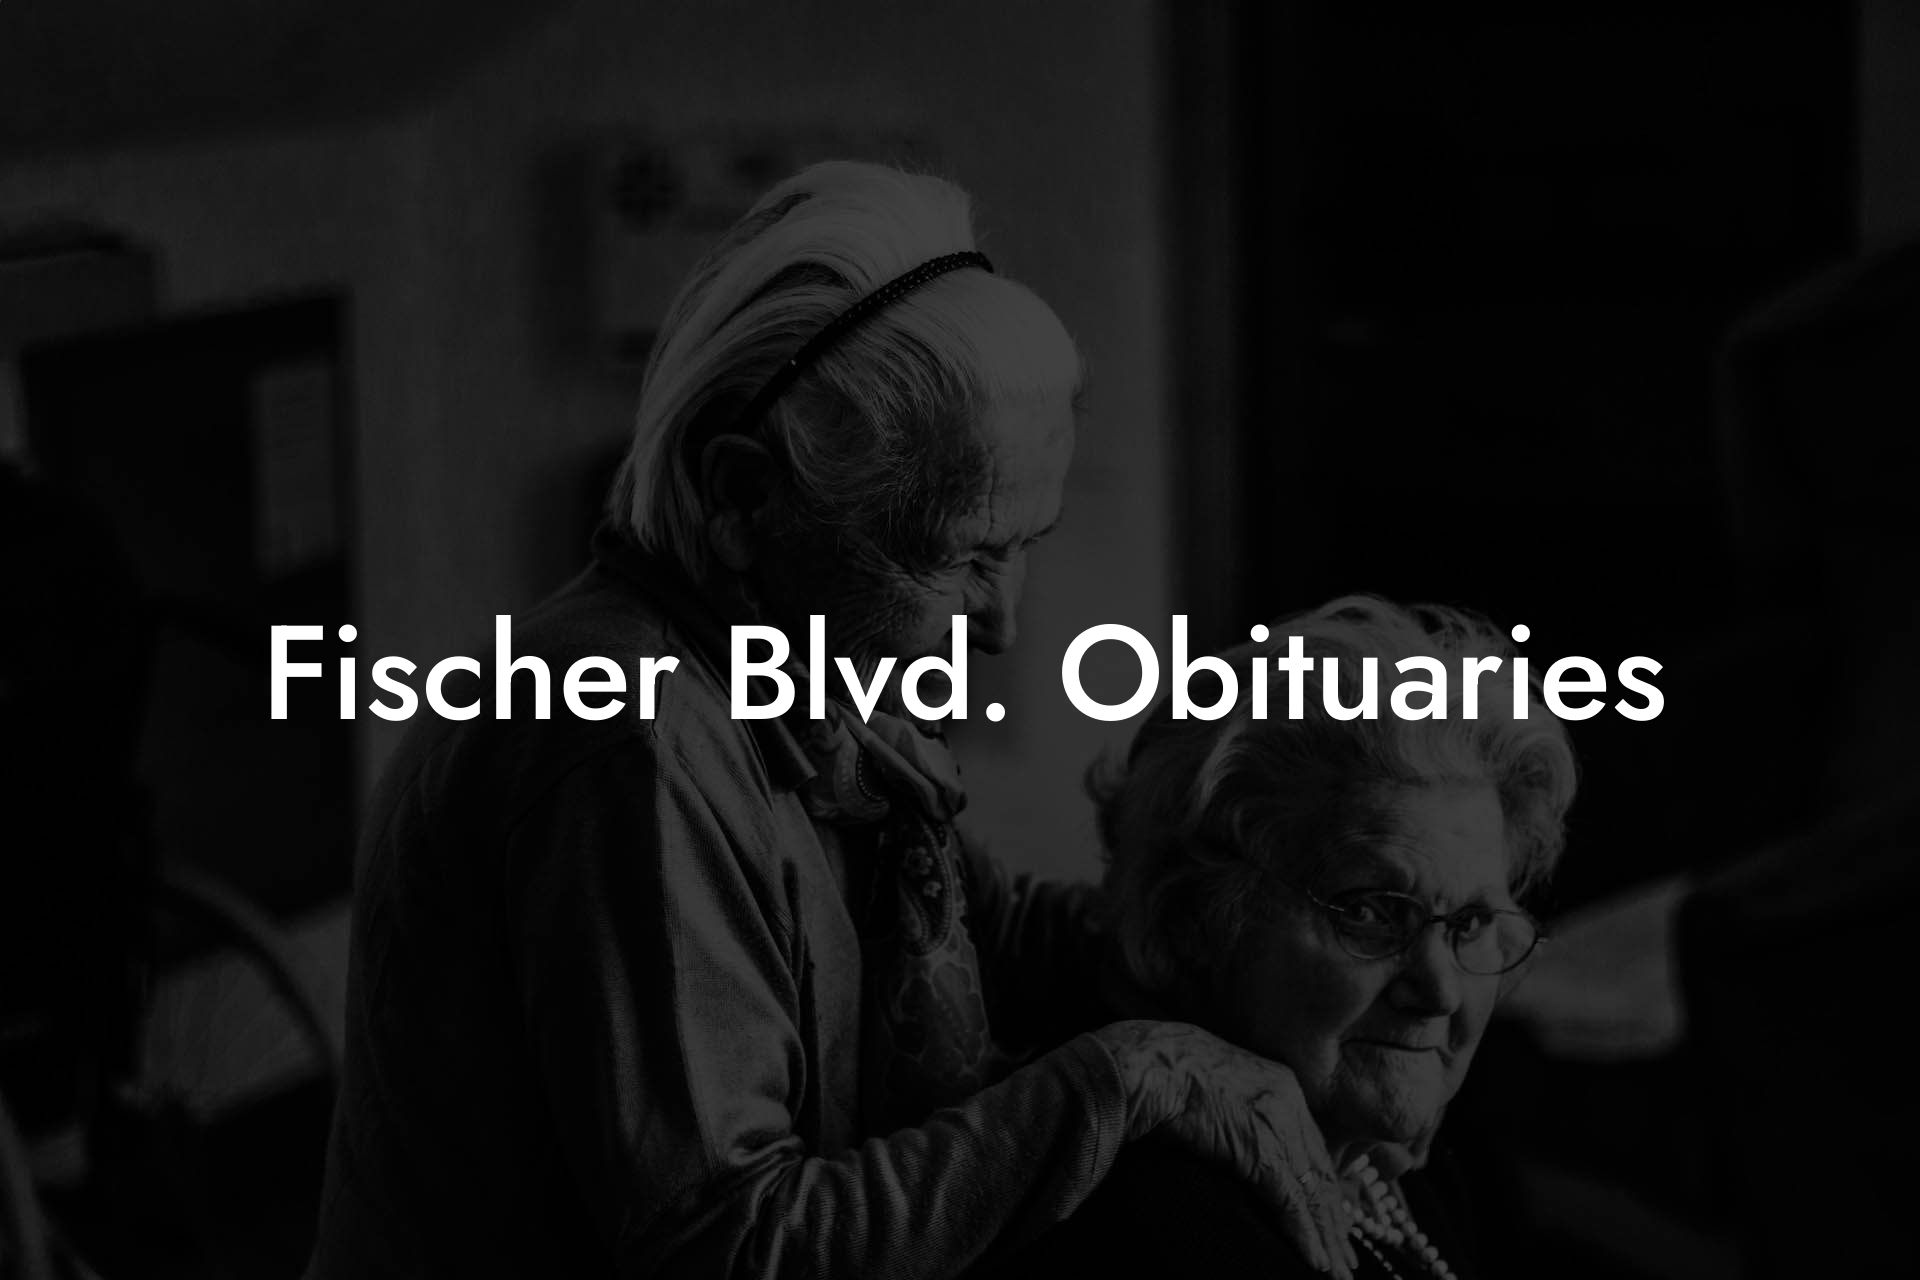 Fischer Blvd. Obituaries